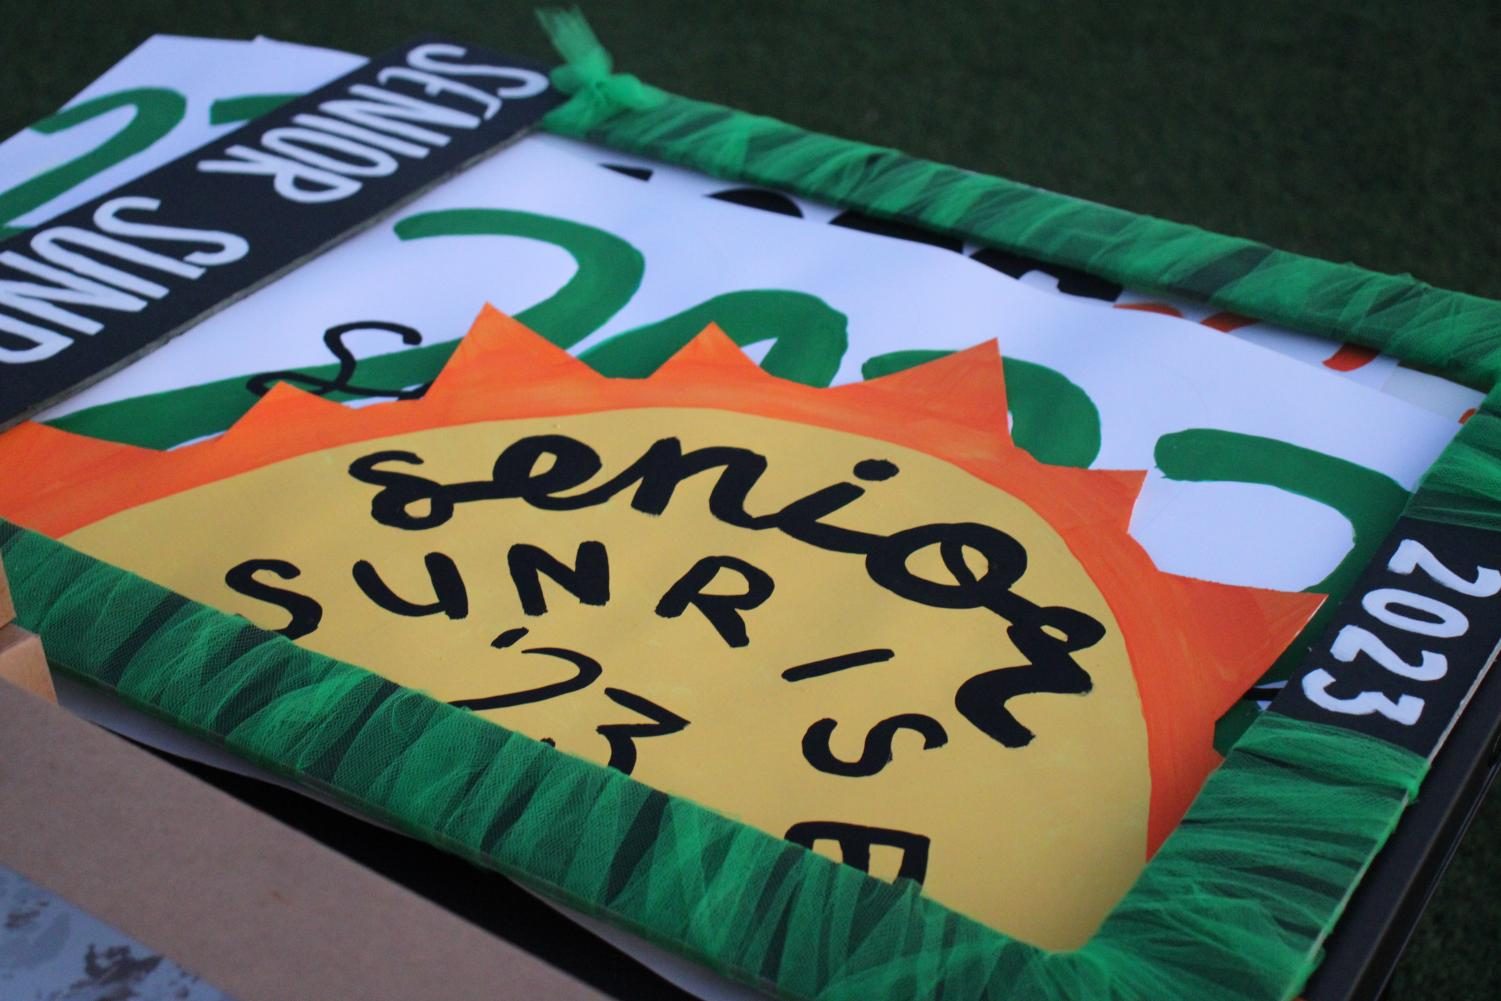 Senior+Sunrise+%28Photos+by+Erica+Sengthavorn%29